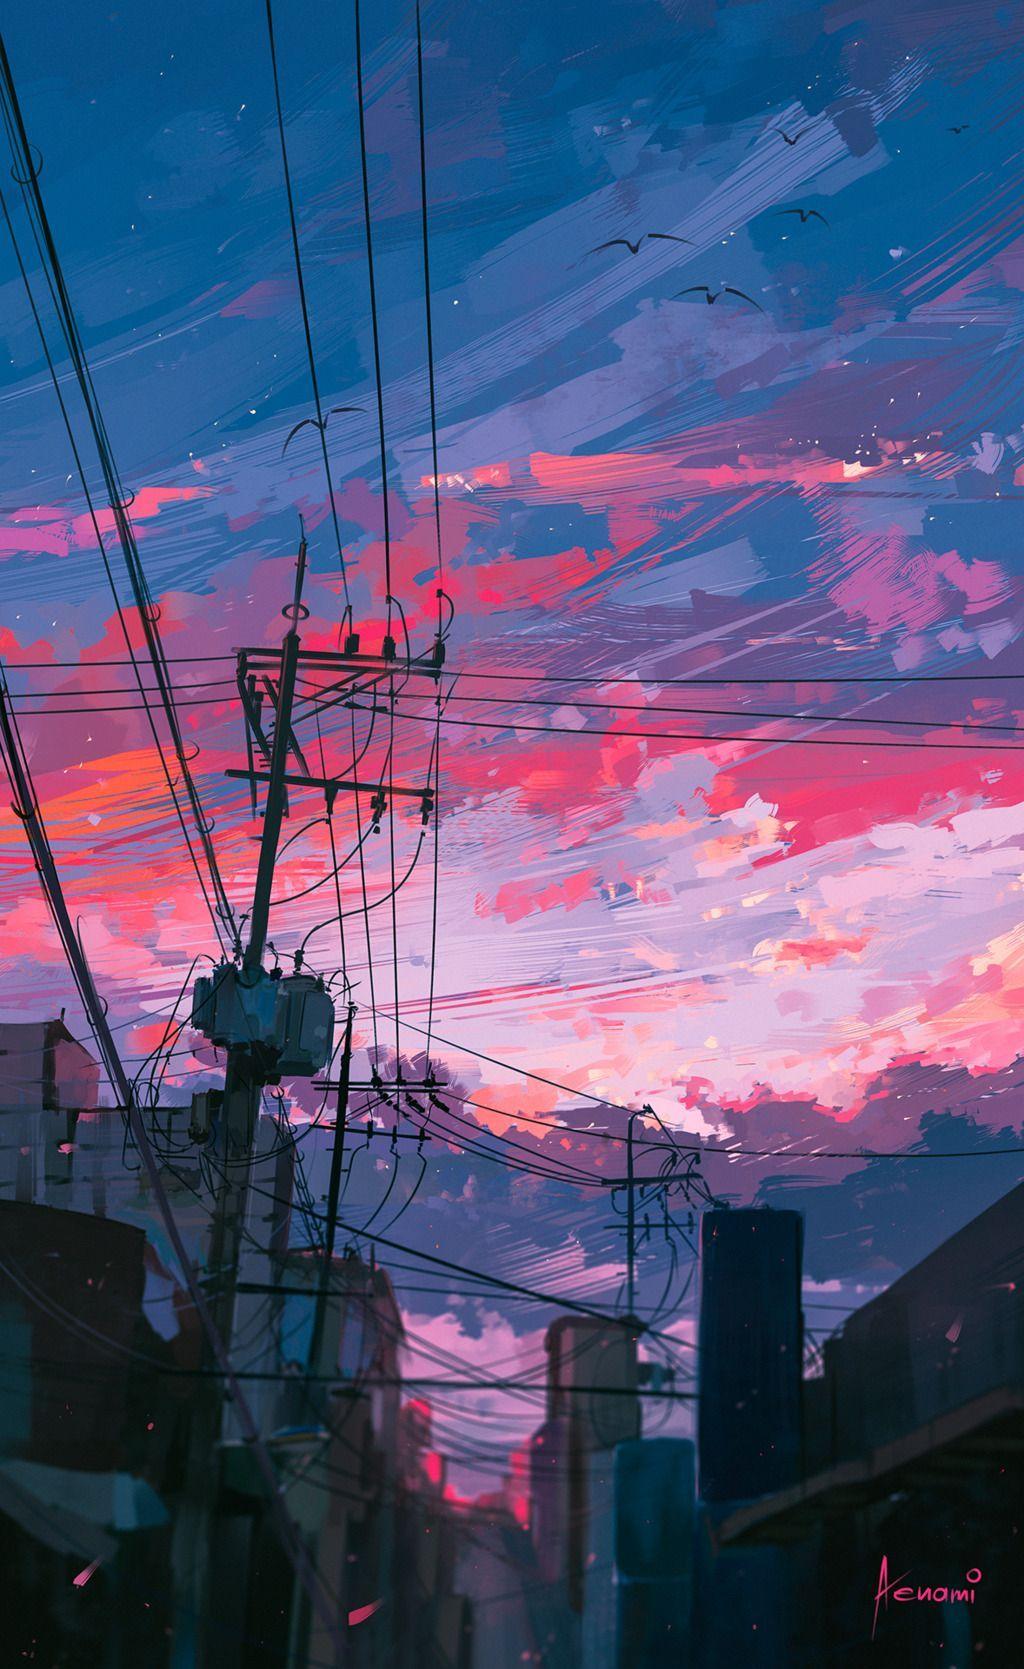 anime aesthetic wallpaper. Anime scenery